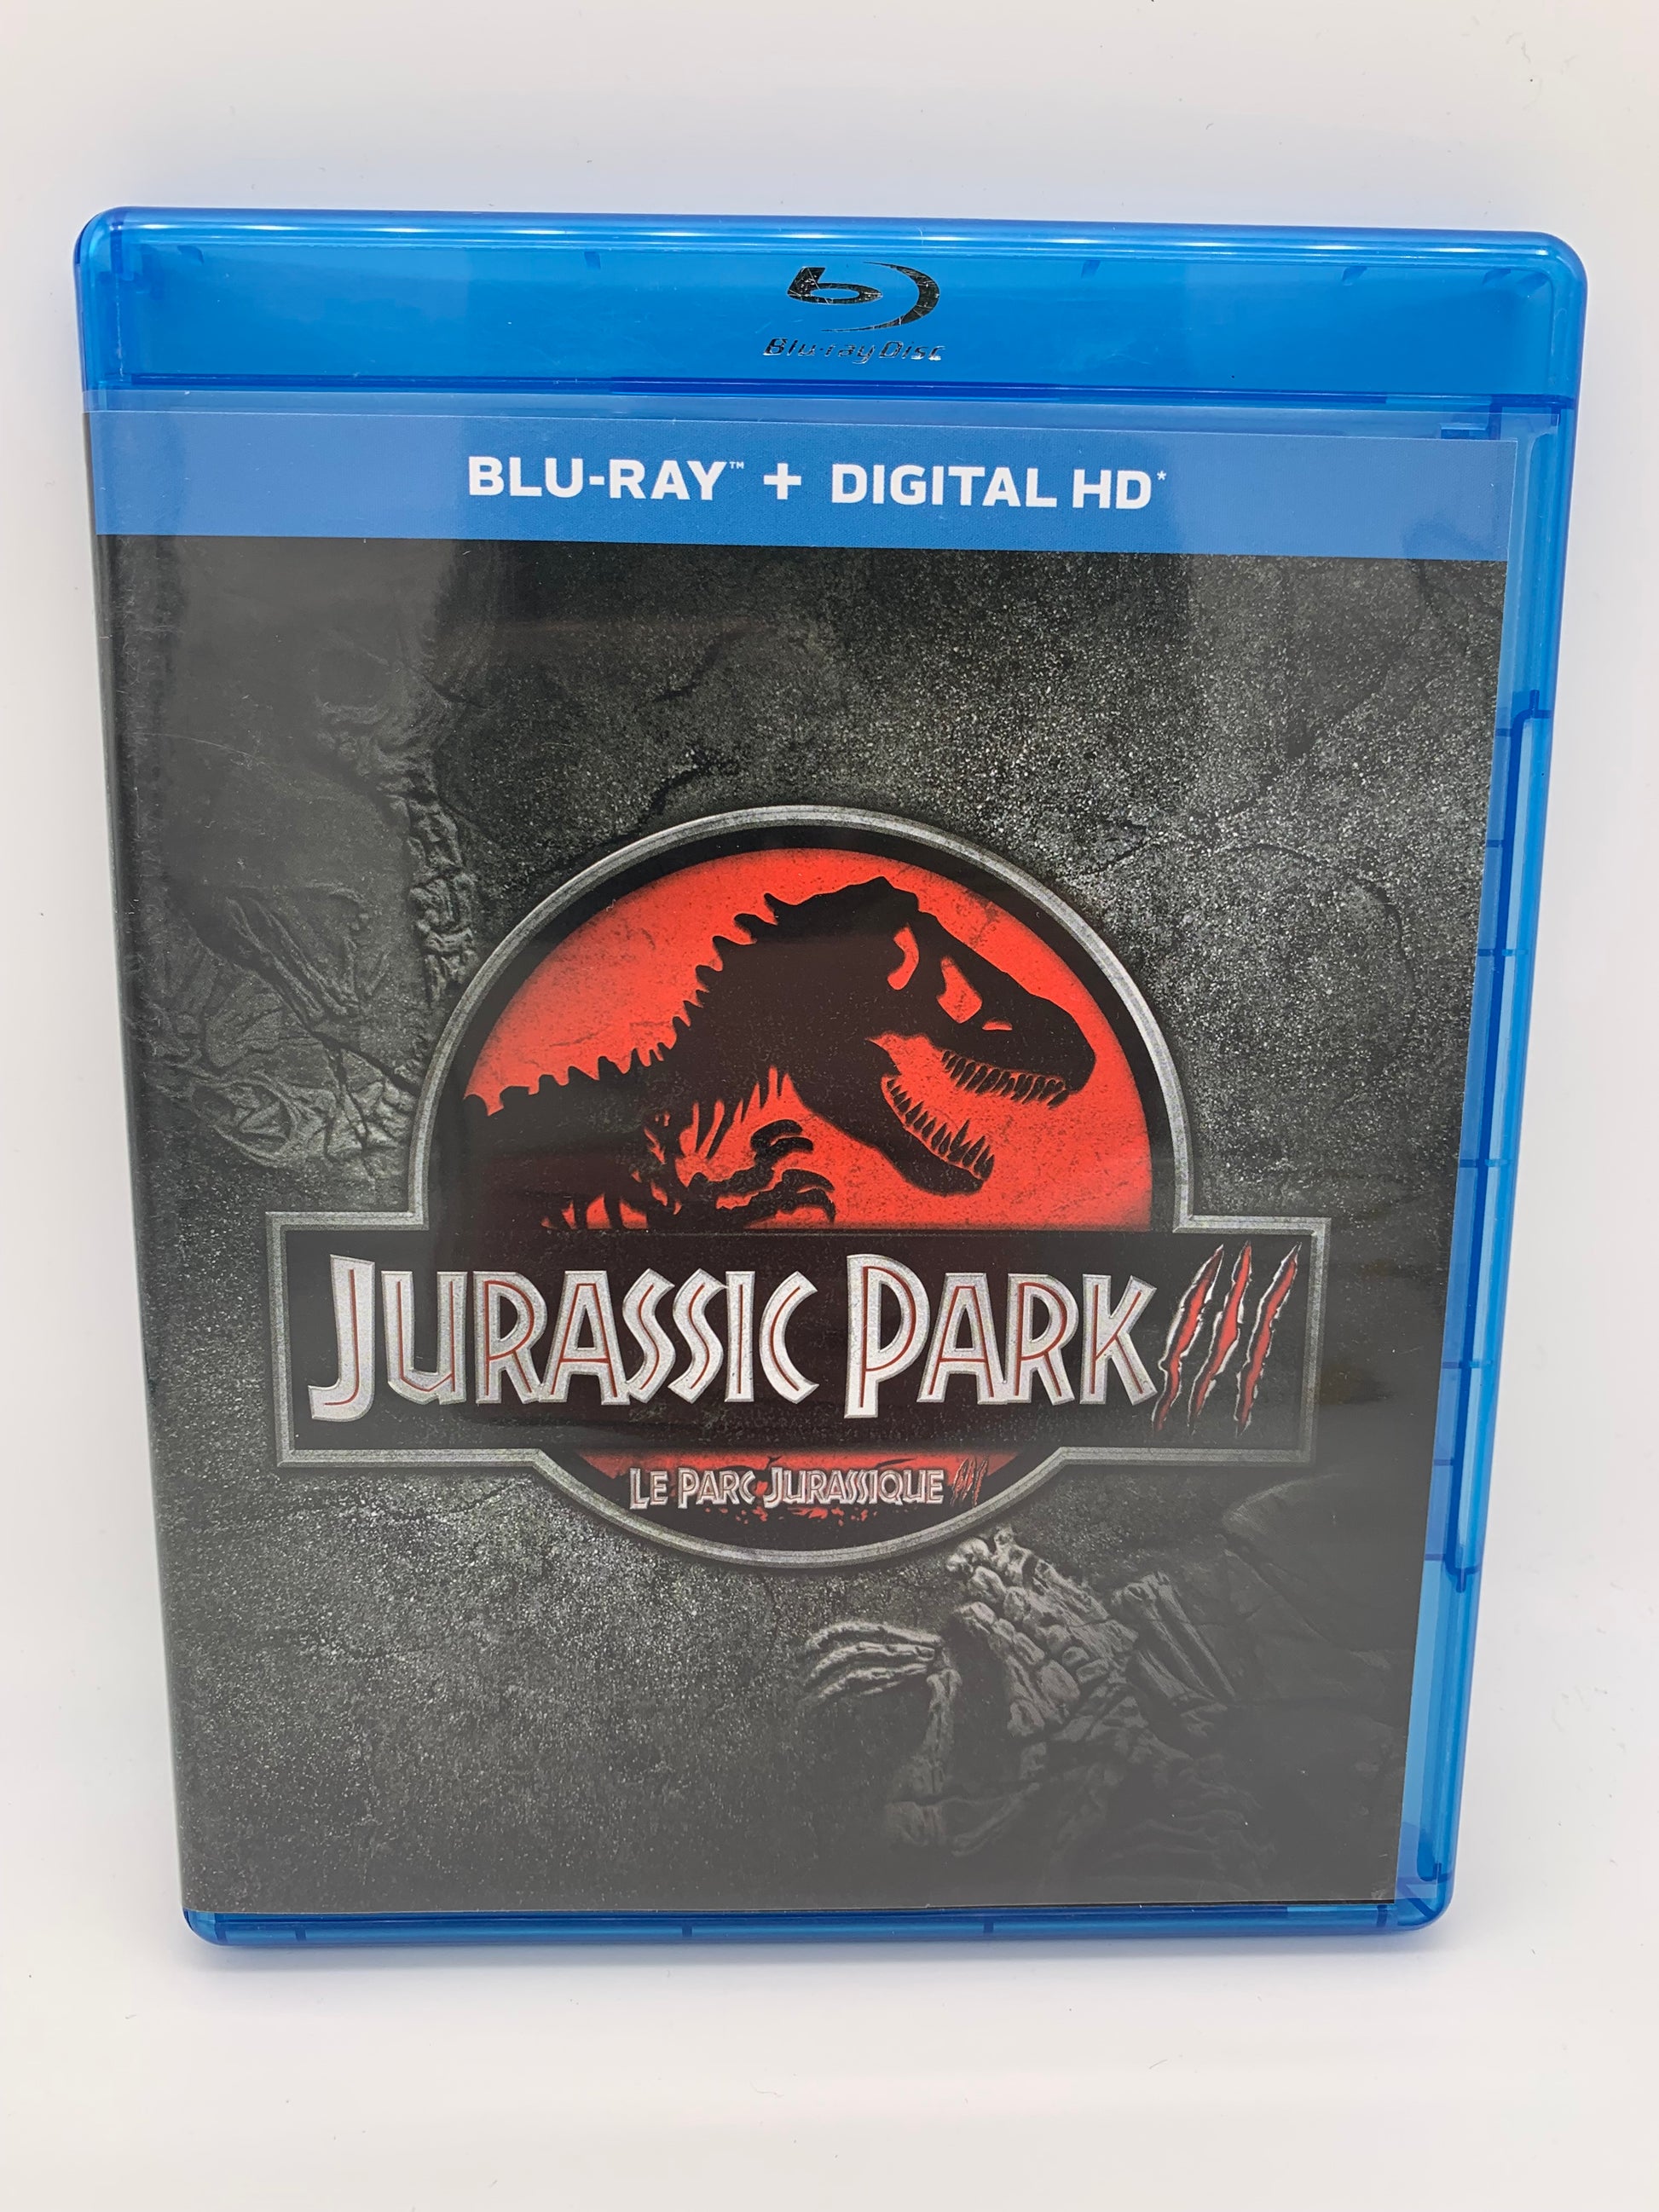 PiXEL-RETRO.COM : Movie Blu-Ray DVD JURASSIC PARK III 3